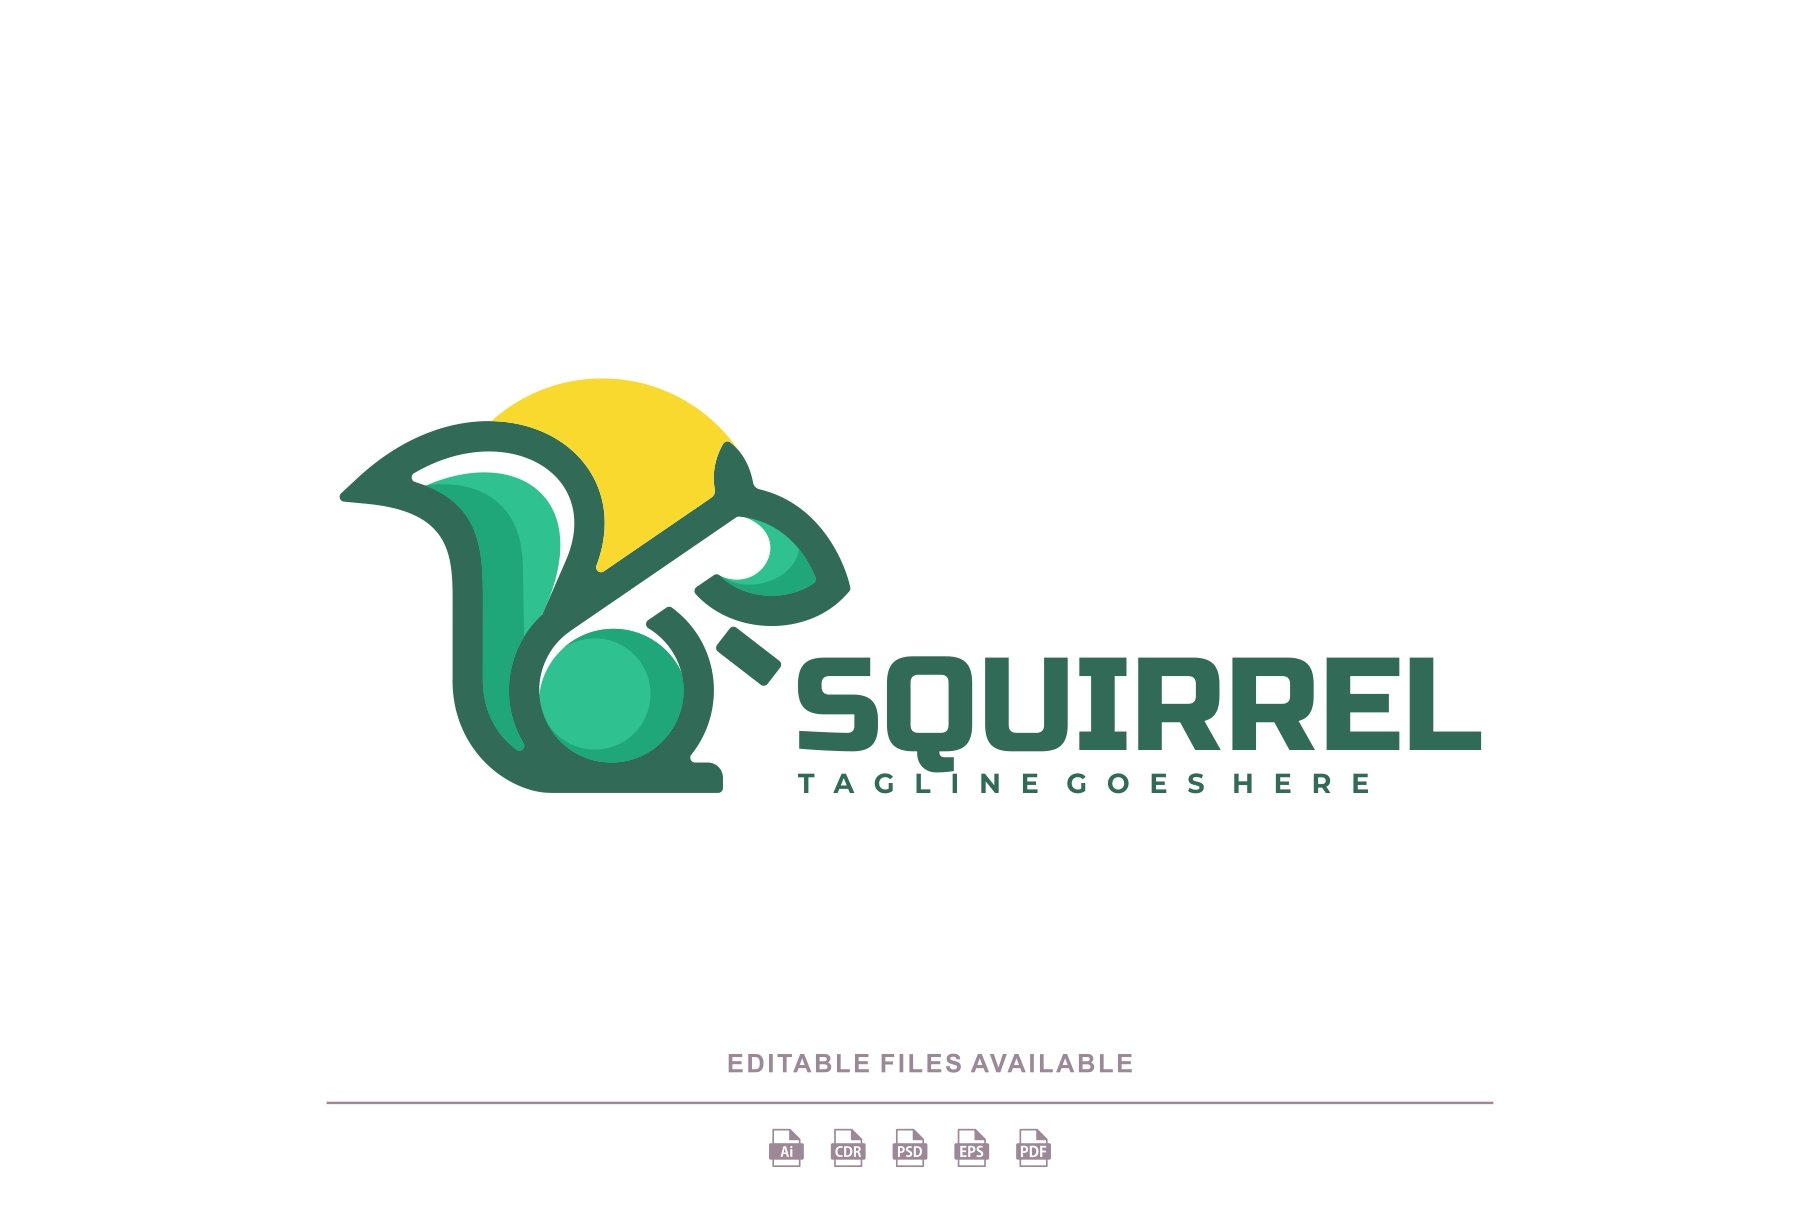 Squirrel Color Mascot Logo cover image.